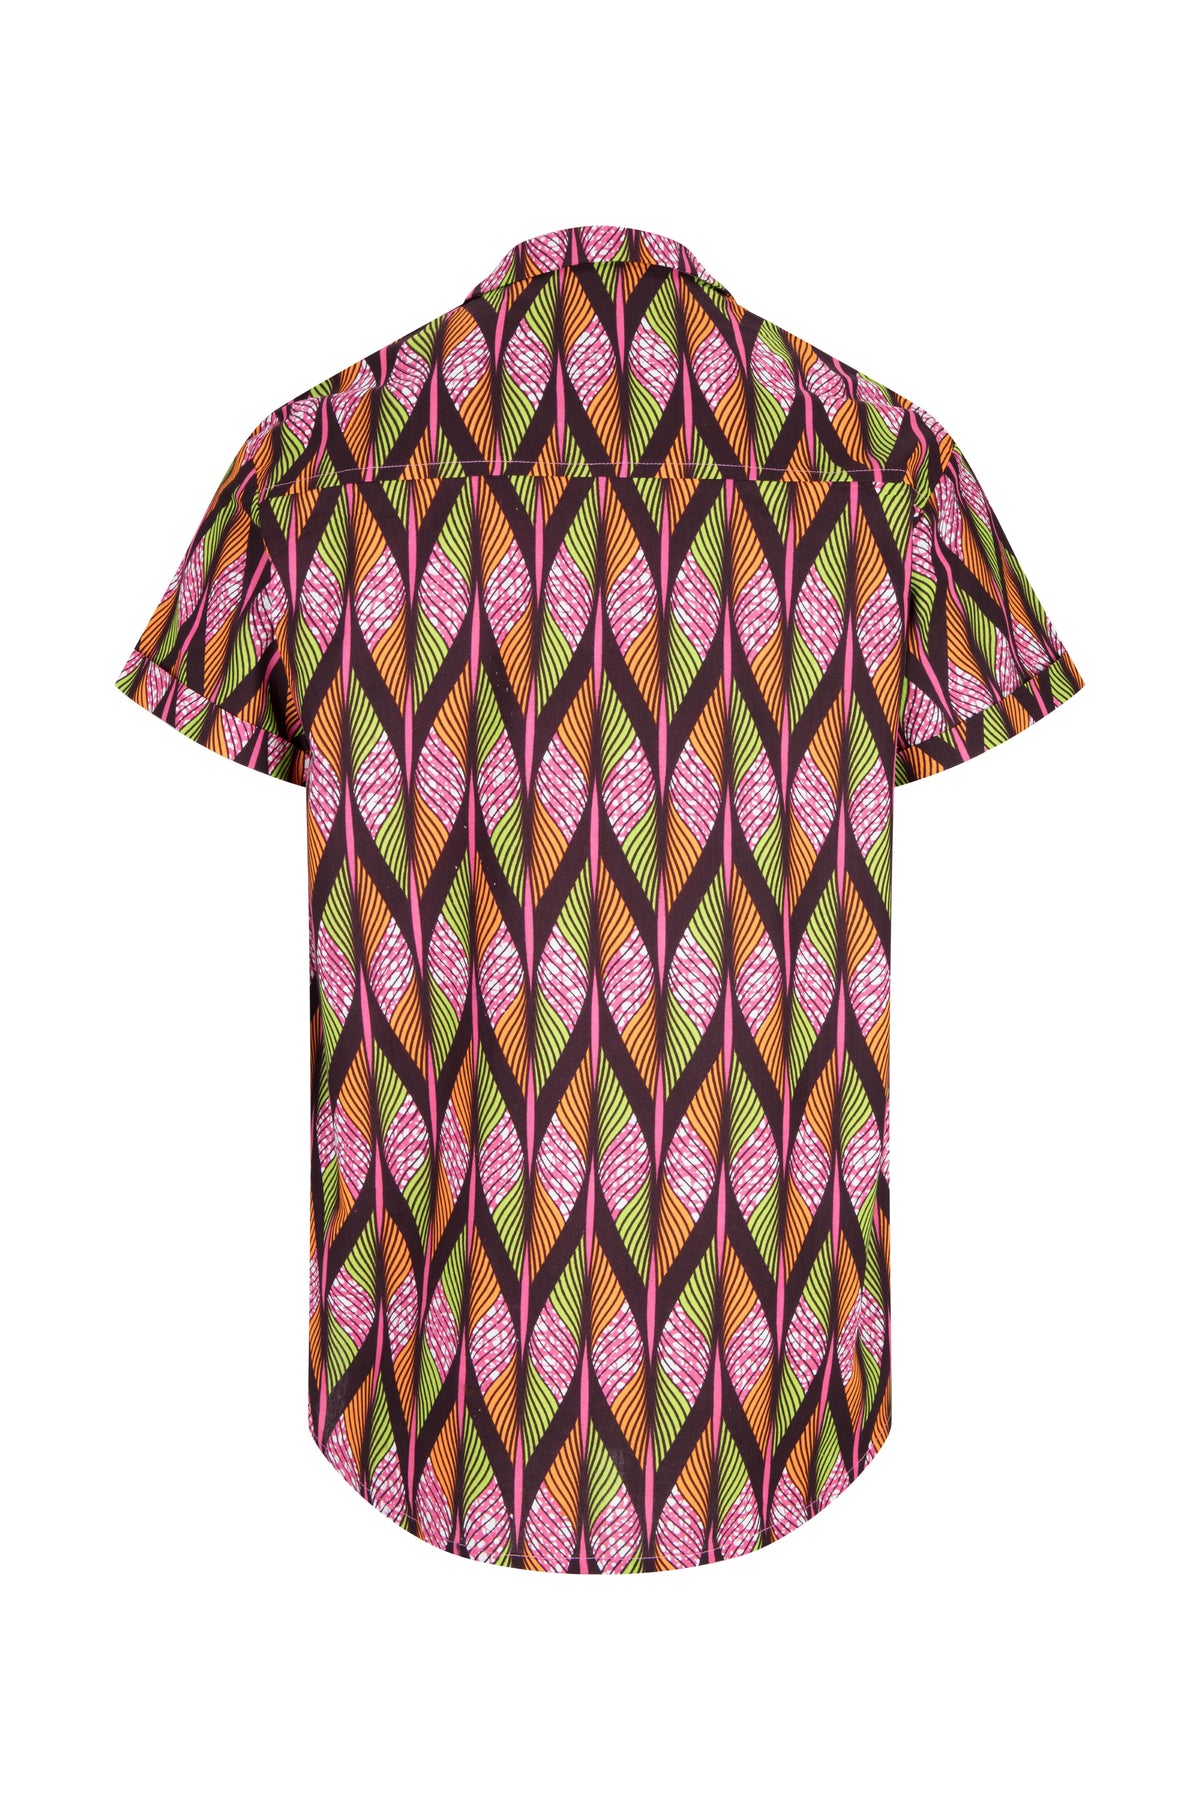 Chris Miami Collar shirt - OHEMA OHENE AFRICAN INSPIRED FASHION